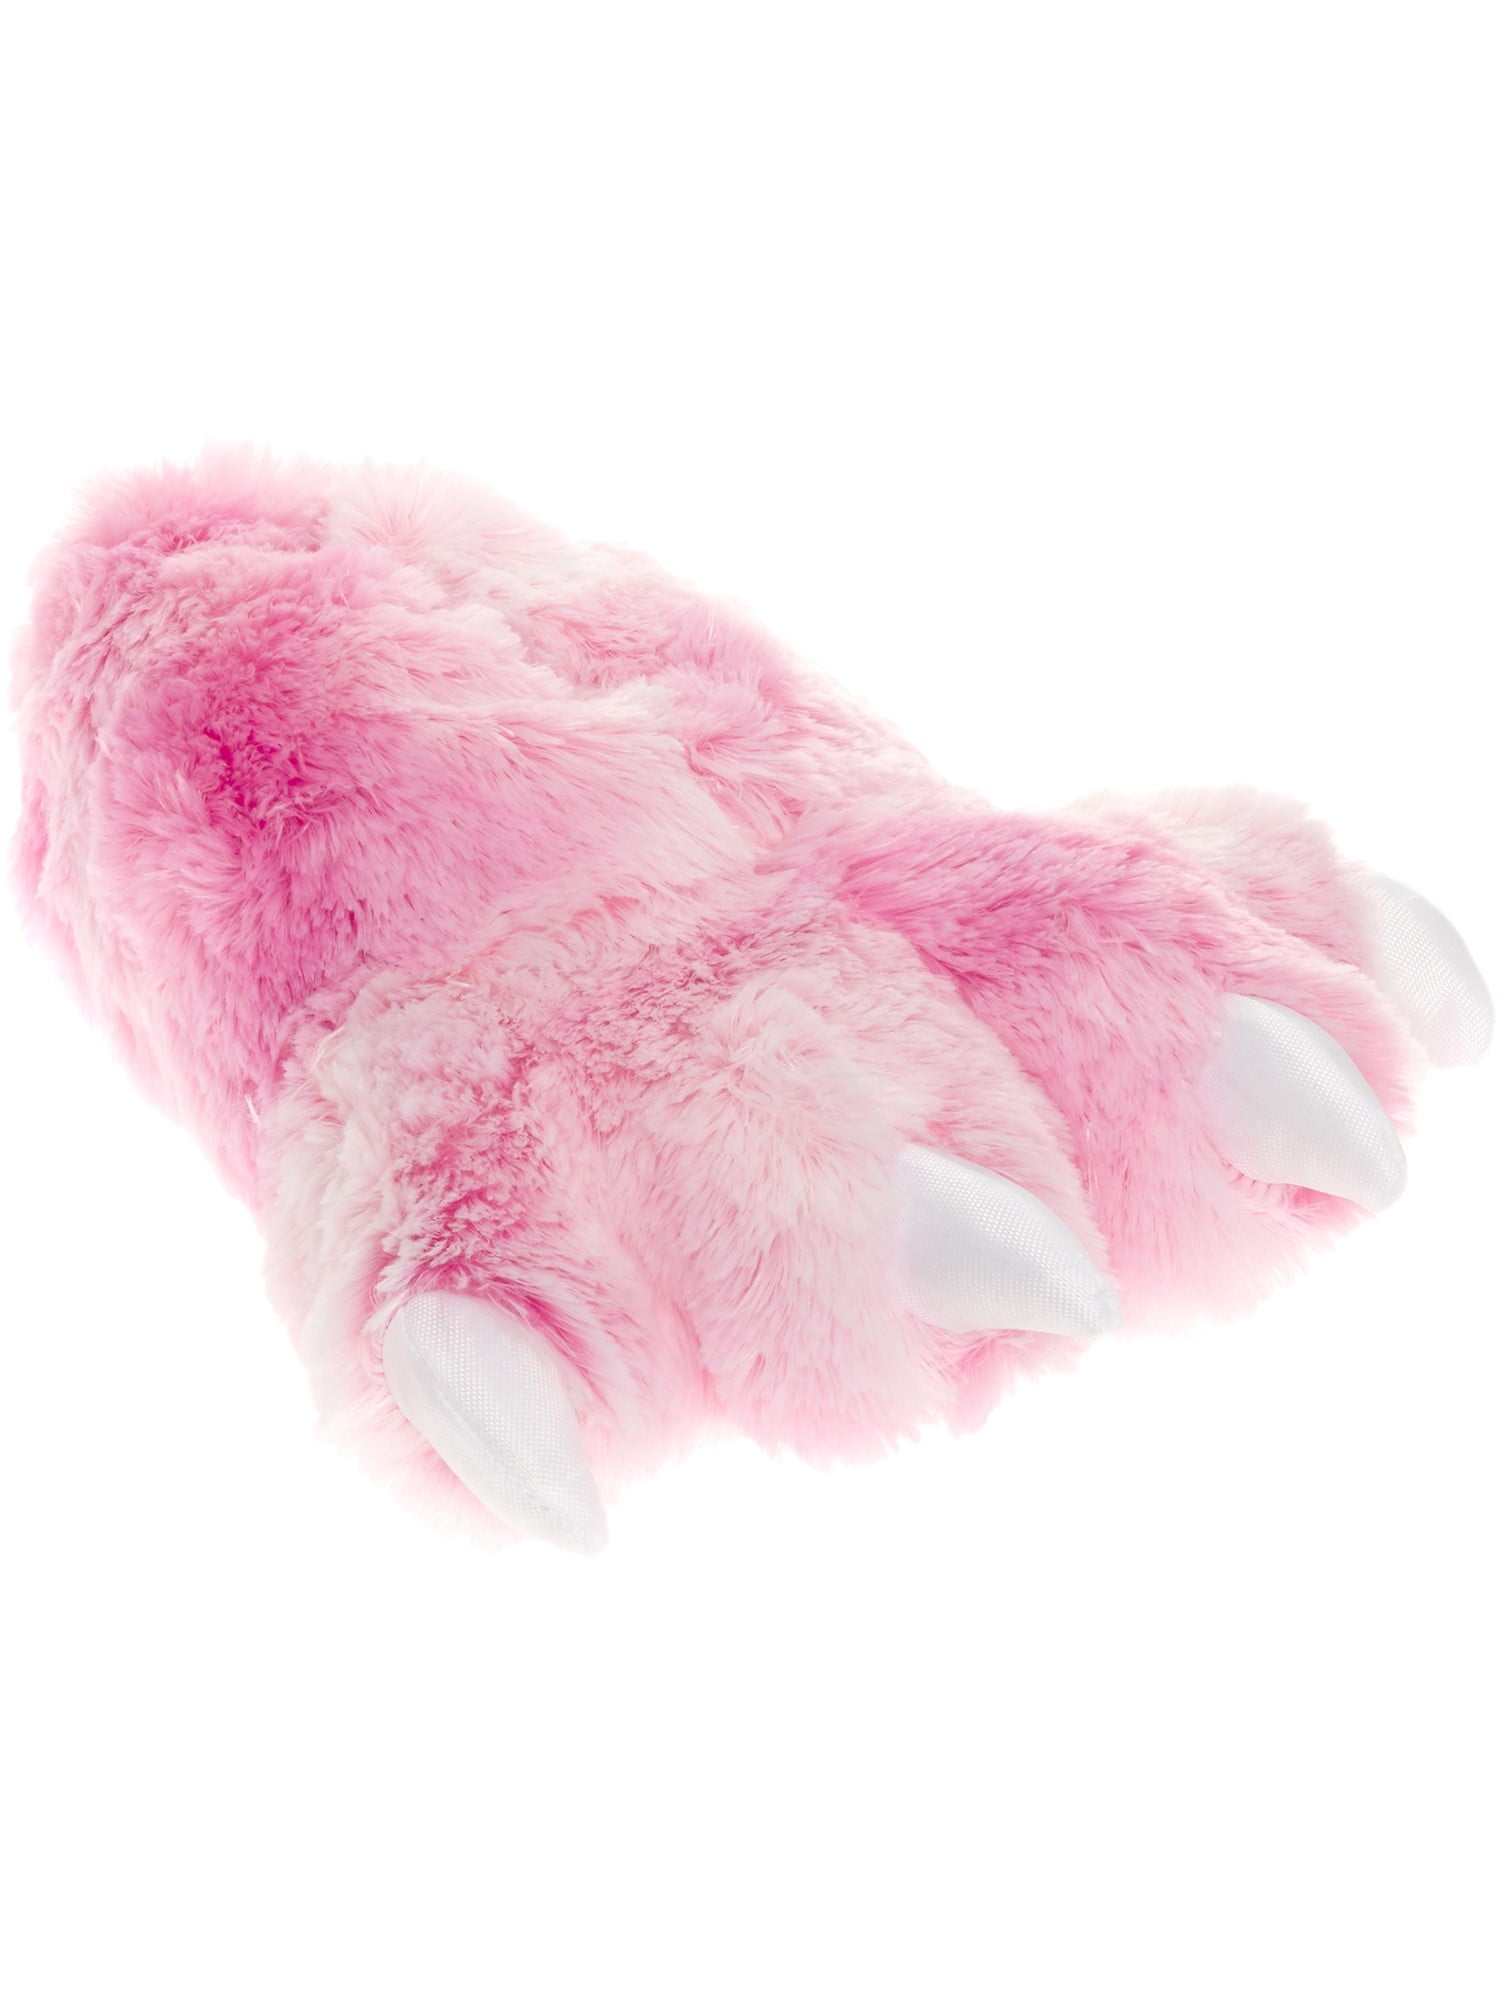 bear paw bedroom slippers